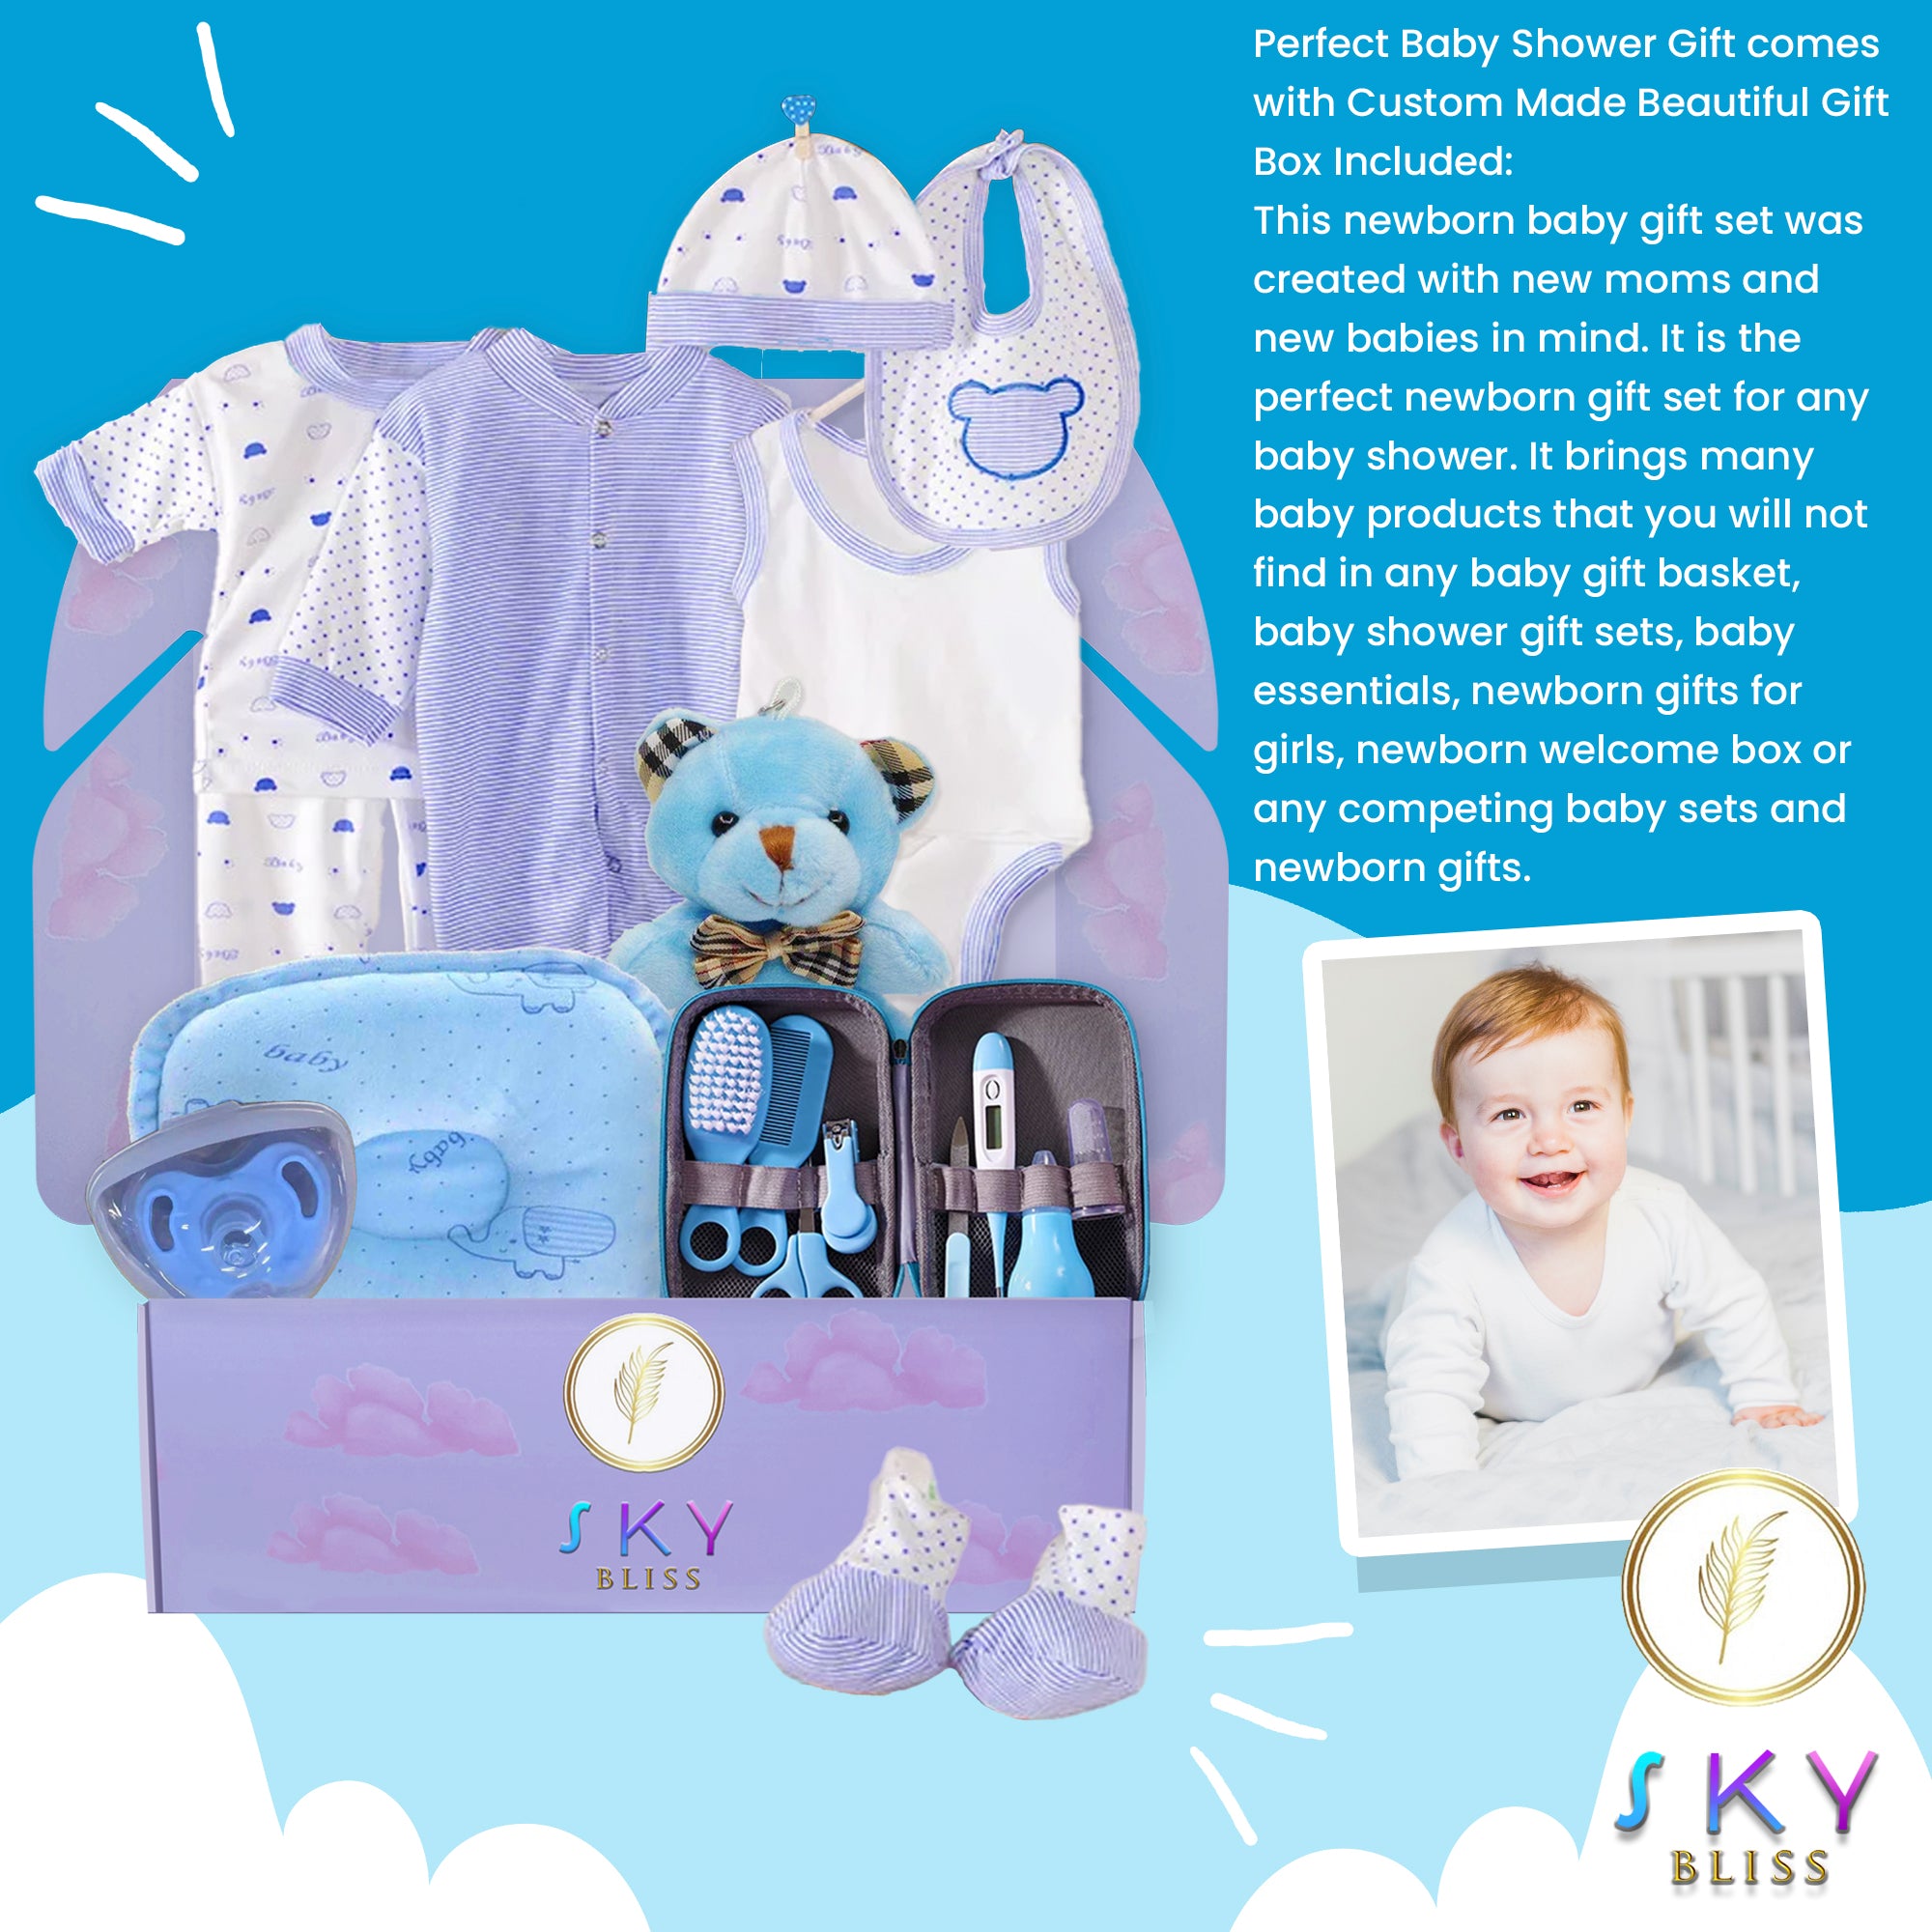 Sky Bliss Baby Gift Box